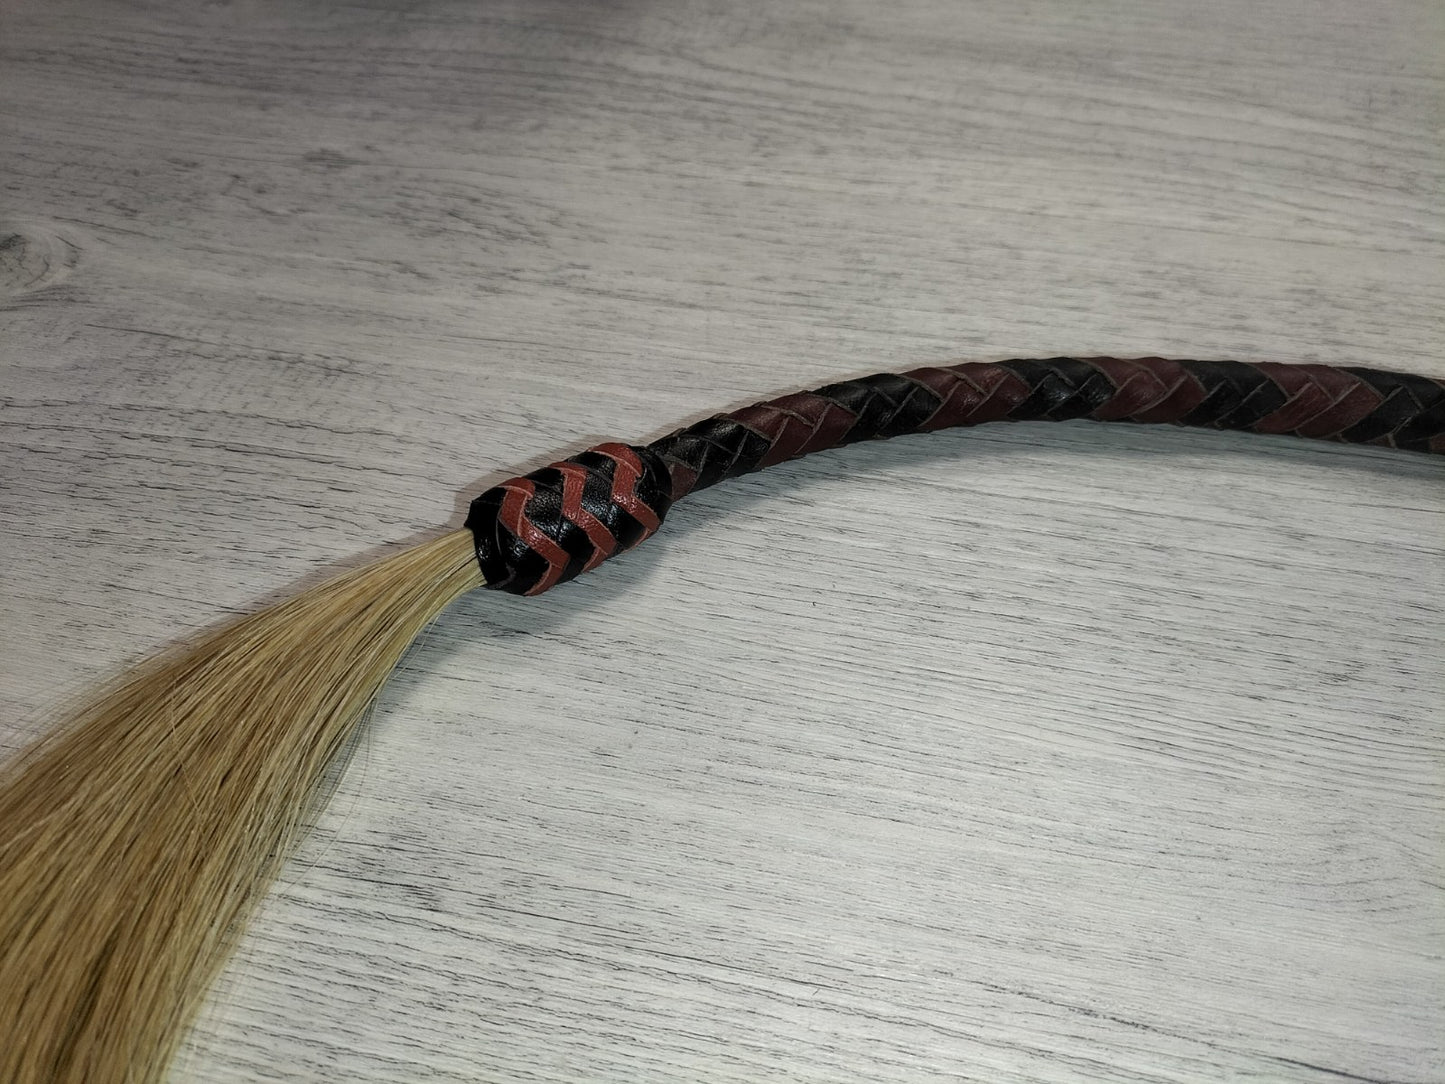 Zwart/rode snake whip met blond koeienhaar